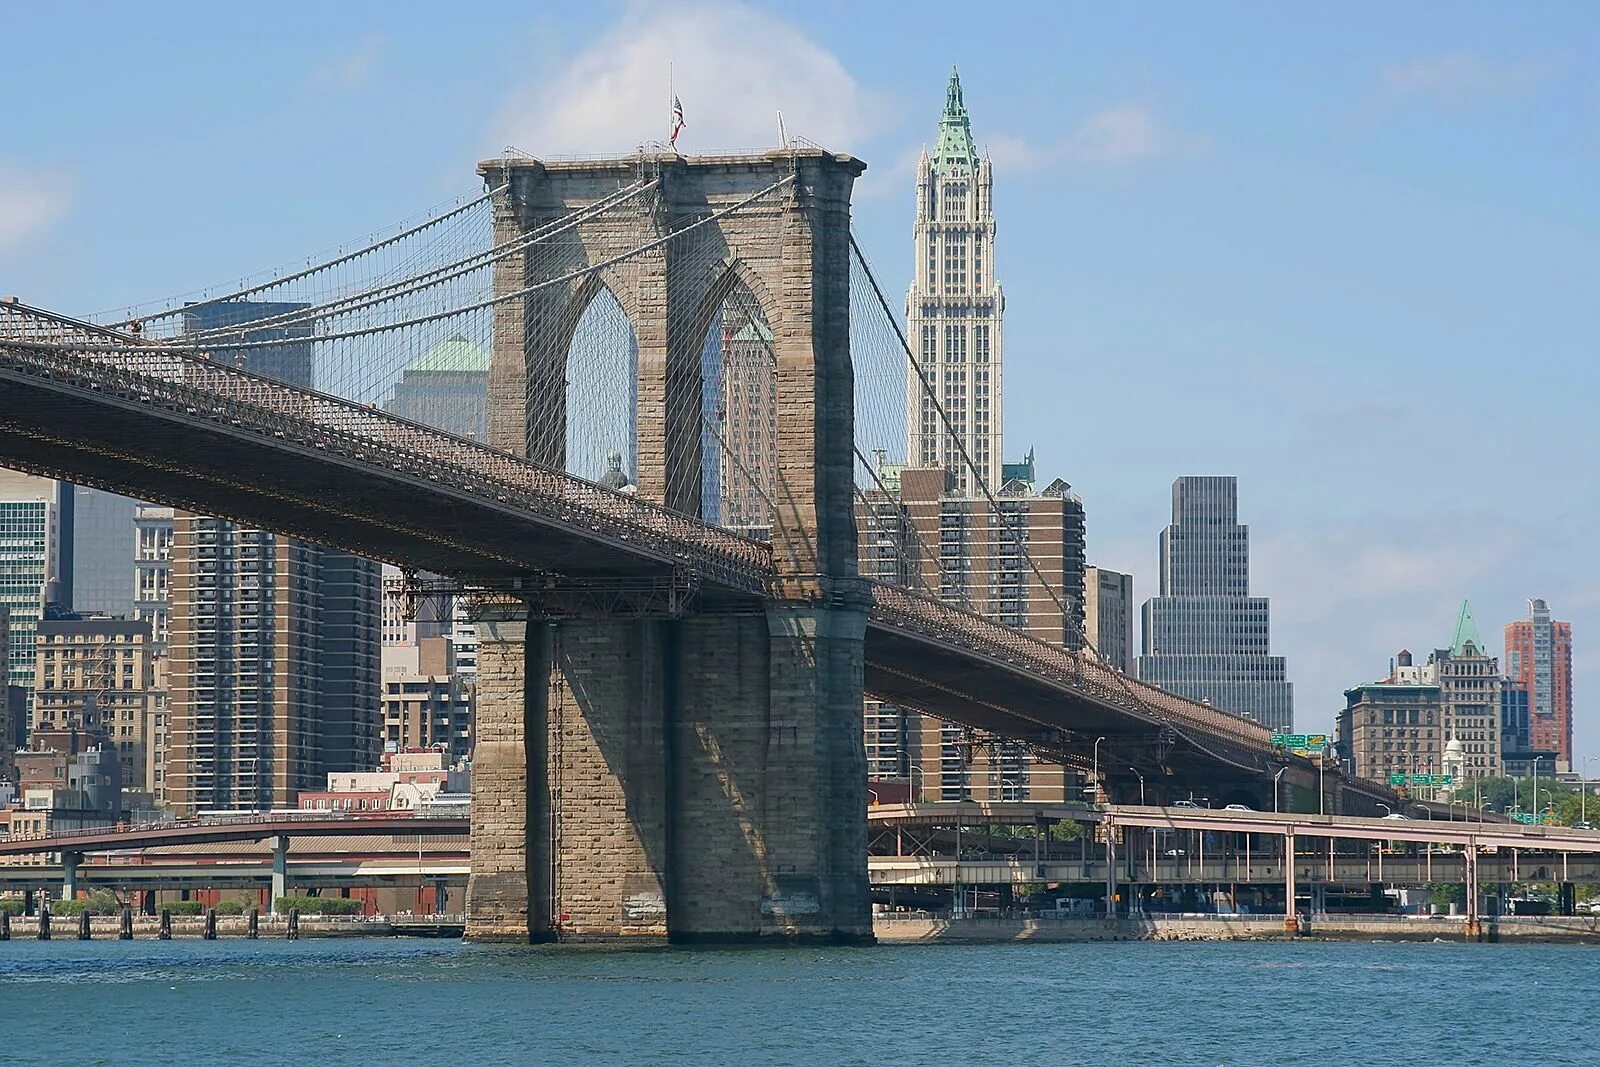 Бруклин мост. Бруклинский мост Нью-Йорк. Достопримечательности Нью Йорка Бруклинский мост. Бруклинский мост Манхеттен в Нью-Йорке. Бруклинский мост в Нью-Йорке 19 века.